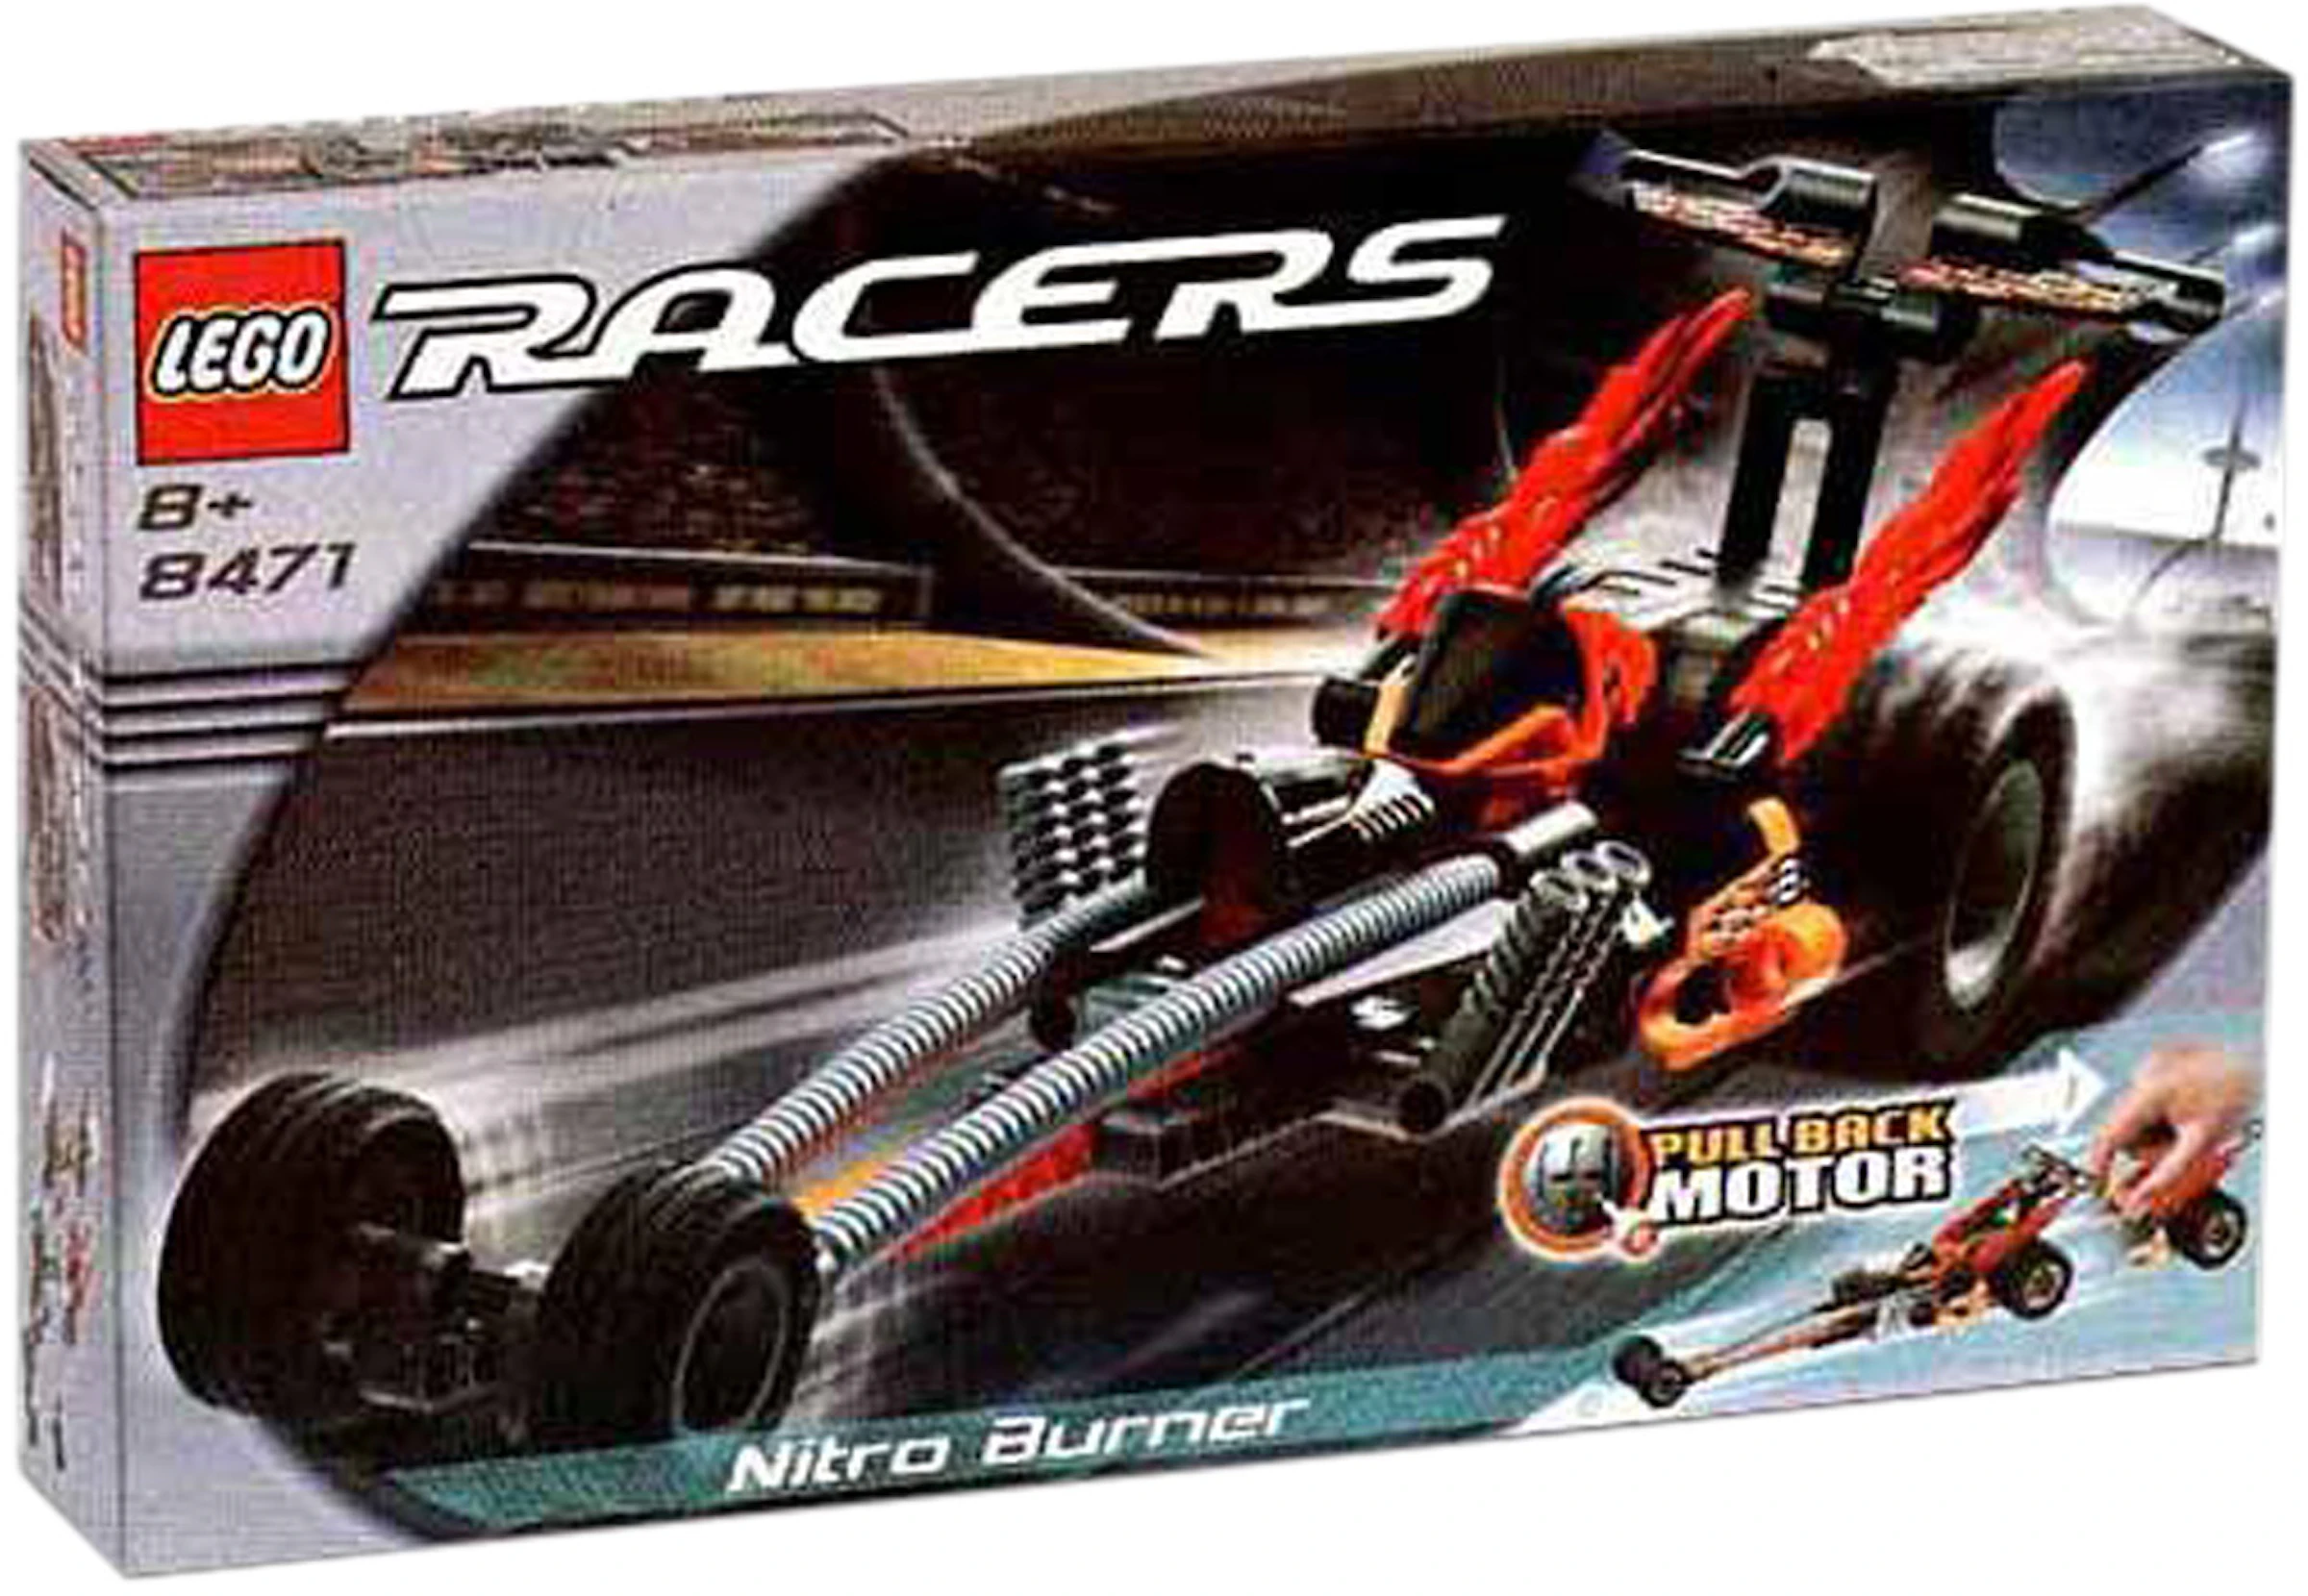 stout Reis Vertrouwen LEGO Racers Nitro Burner Set 8471 - US